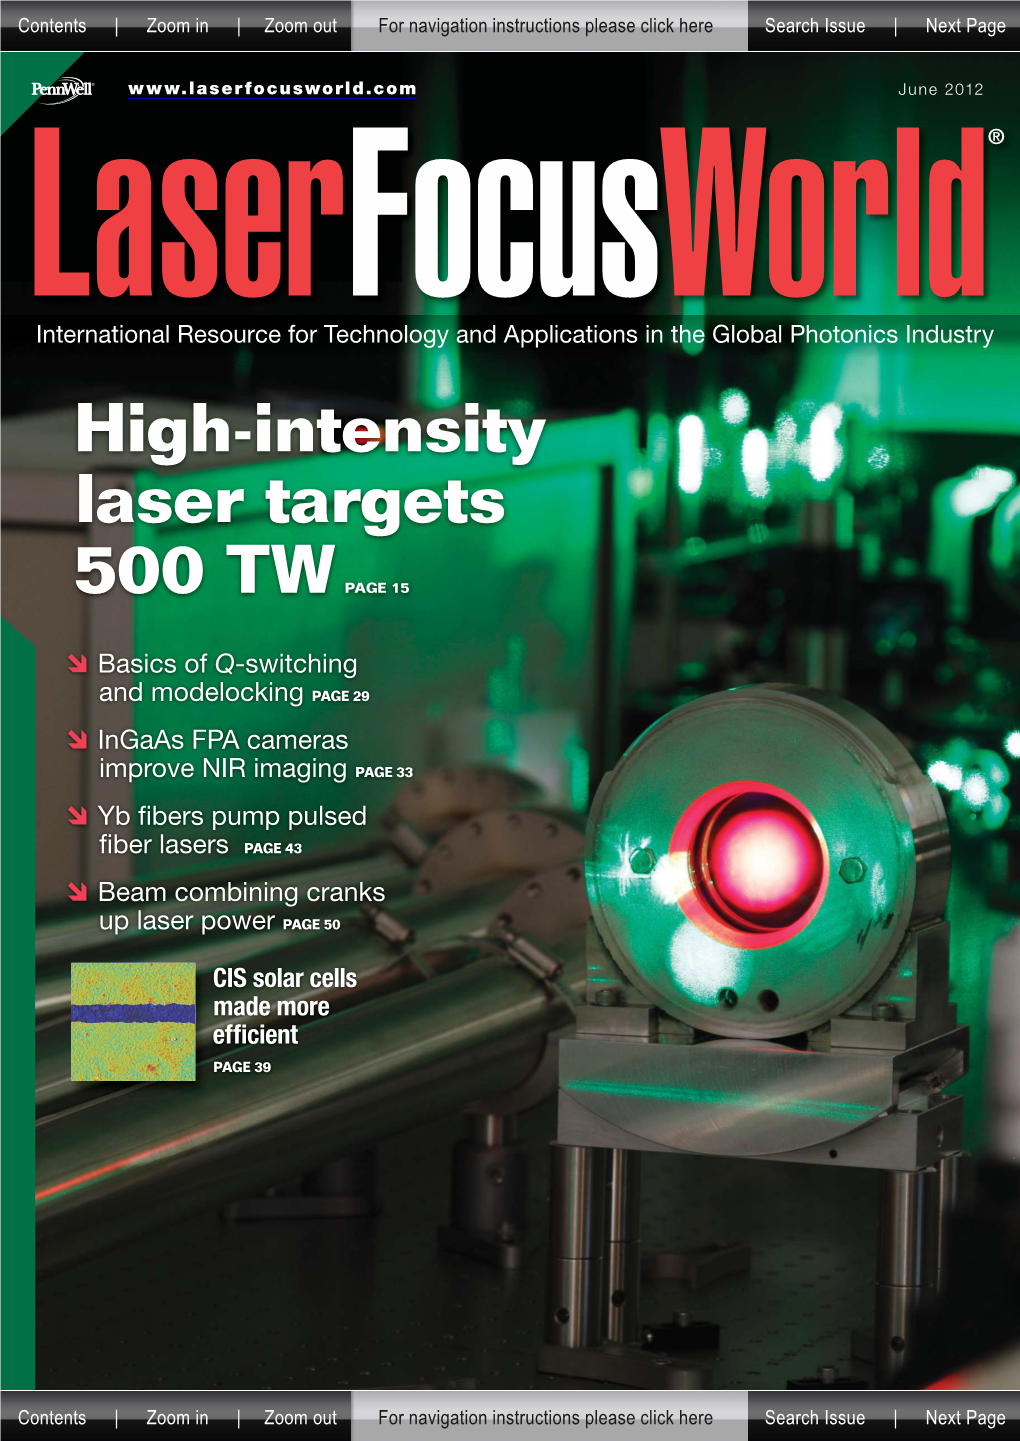 High-Intensity Laser Targets